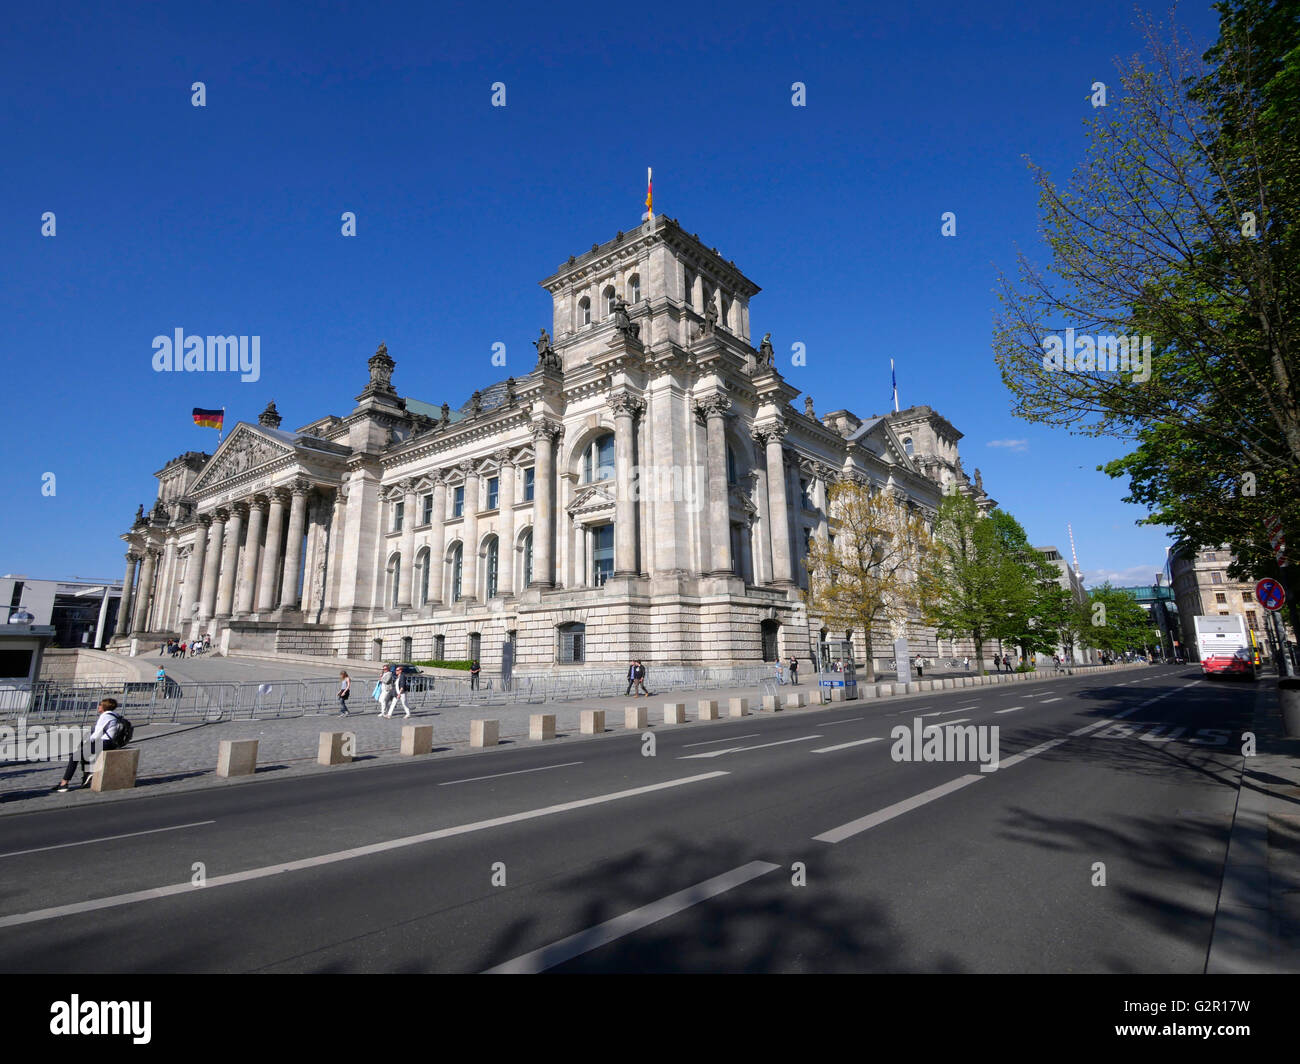 Bâtiment du Parlement allemand Reichstag, Berlin, Allemagne, Europe. Banque D'Images